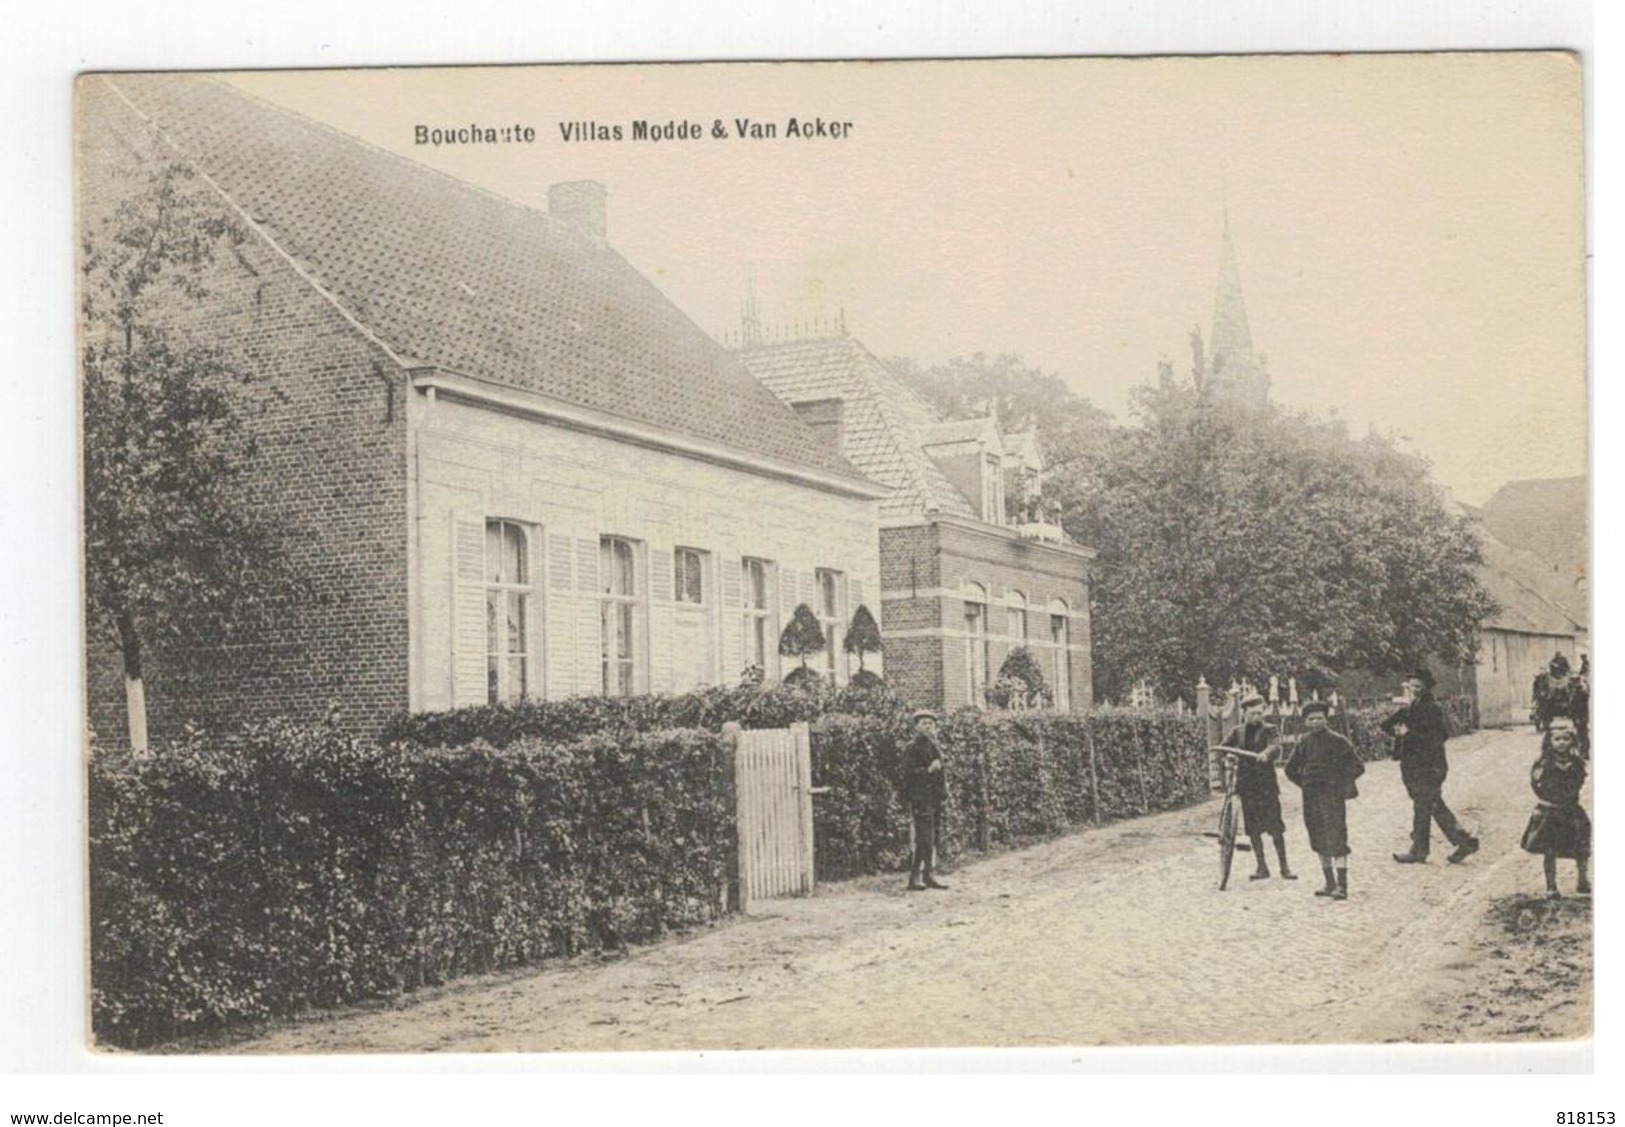 Boekhoute  Bouchaute  Villas Modde & Van Acker - Assenede